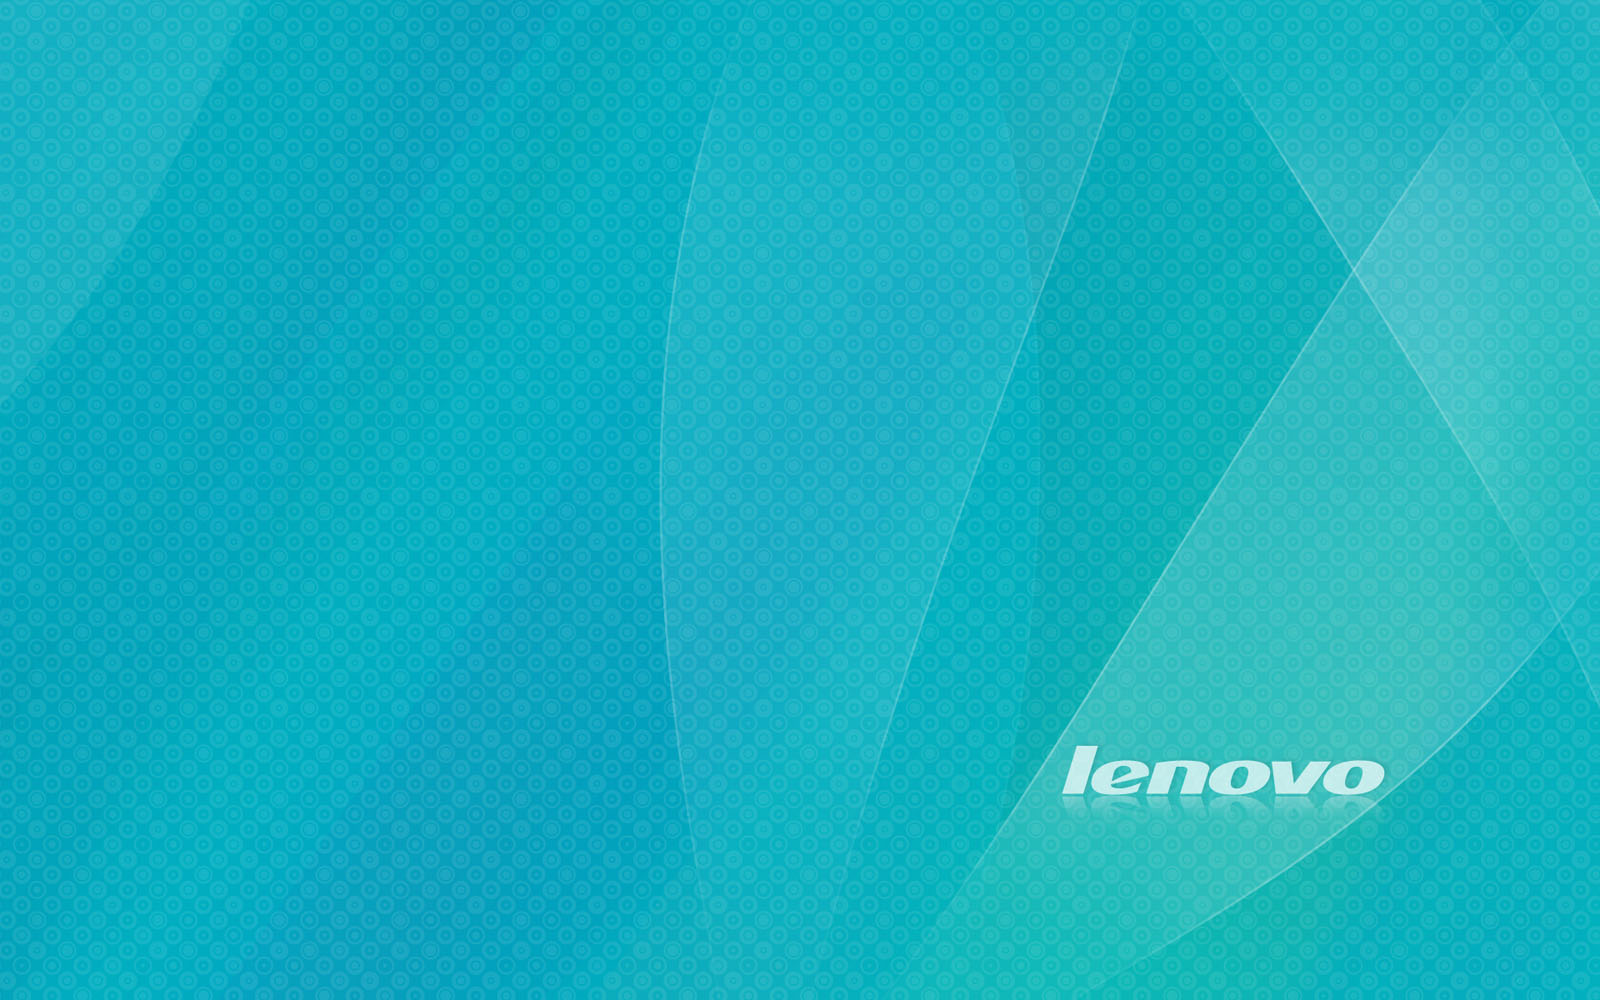 Lenovo wallpapers download desktop cool wallpapers | Chainimage